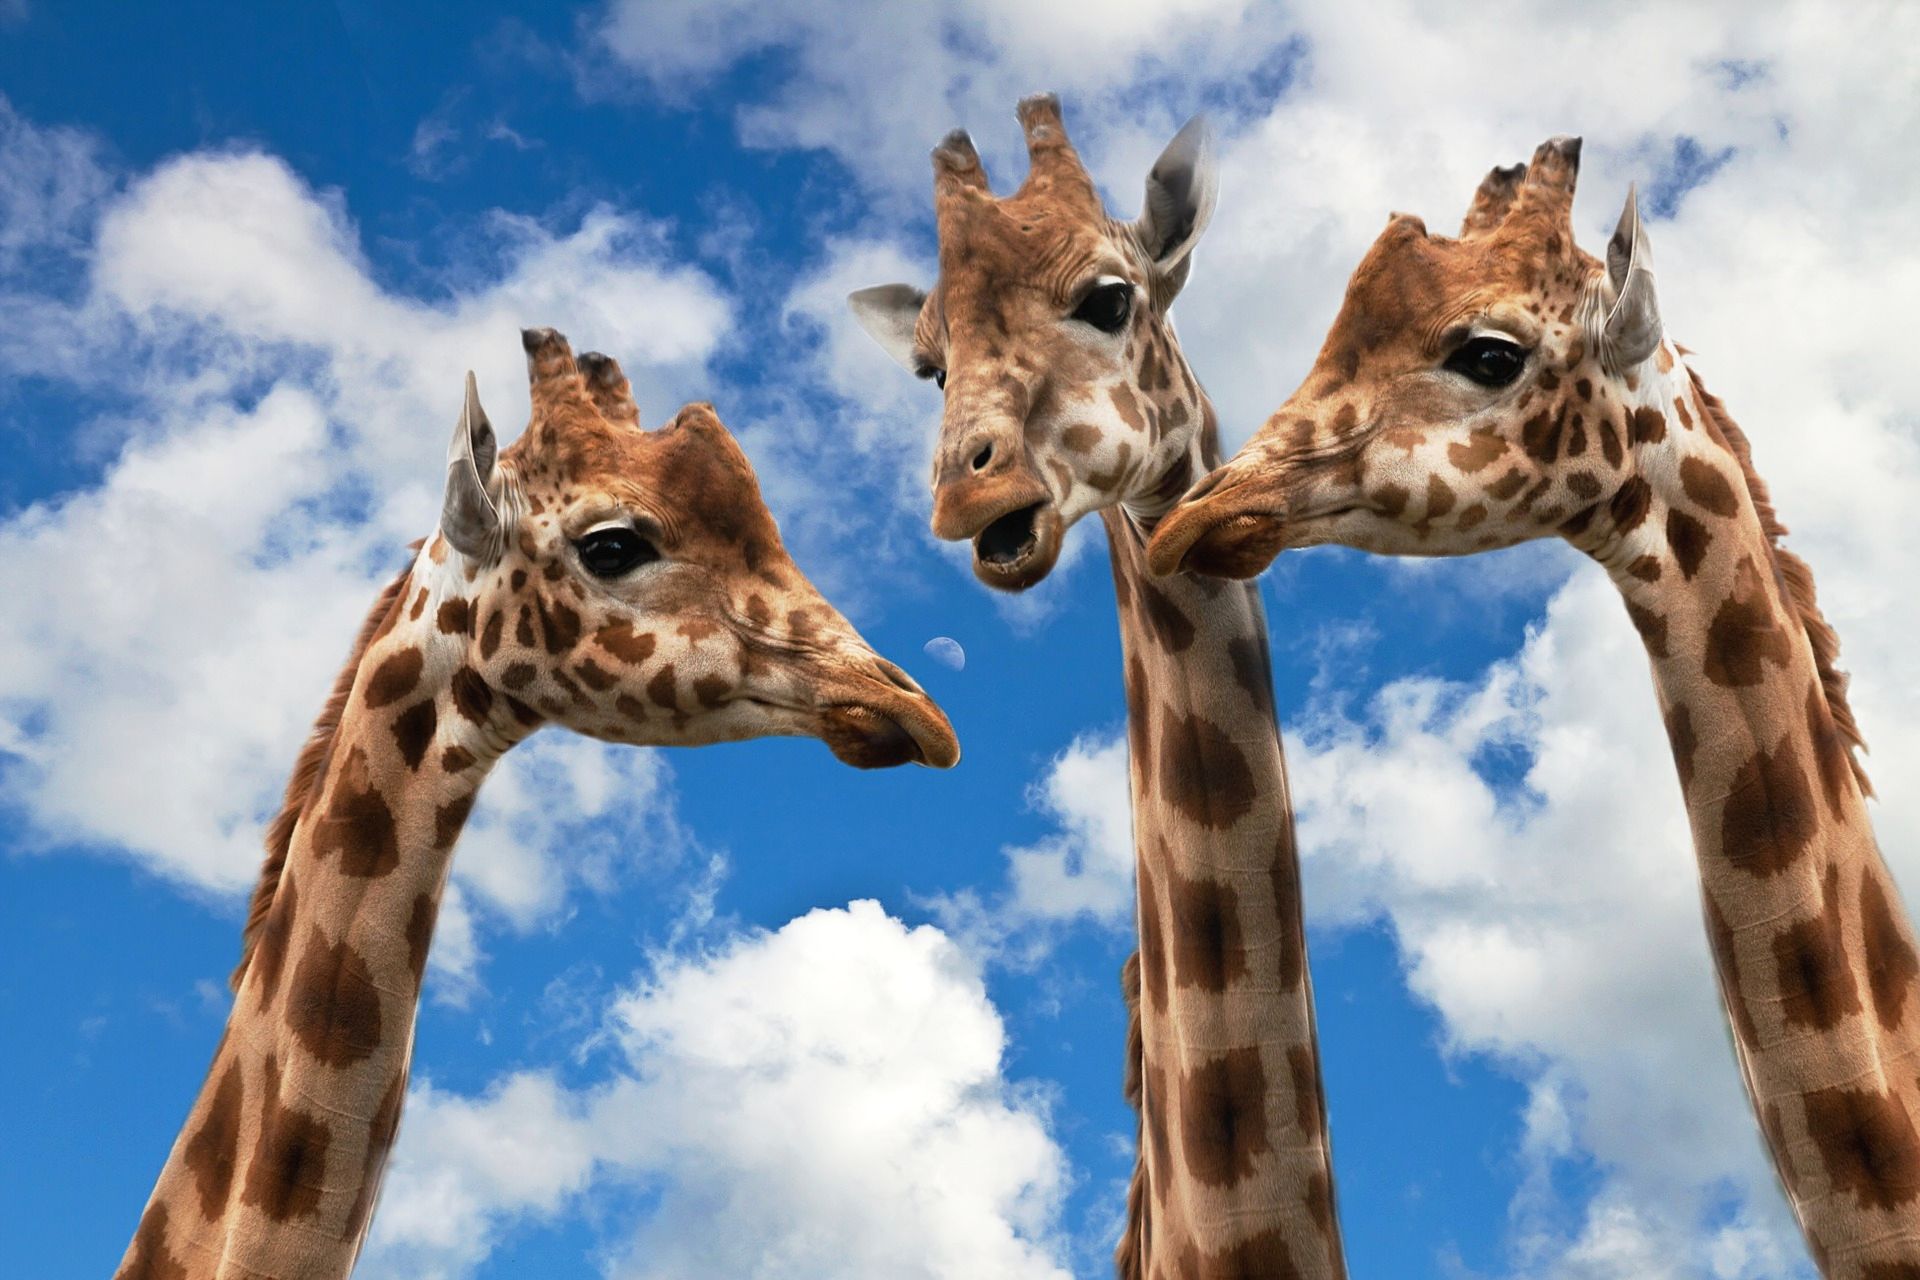 giraffes appear to be talking